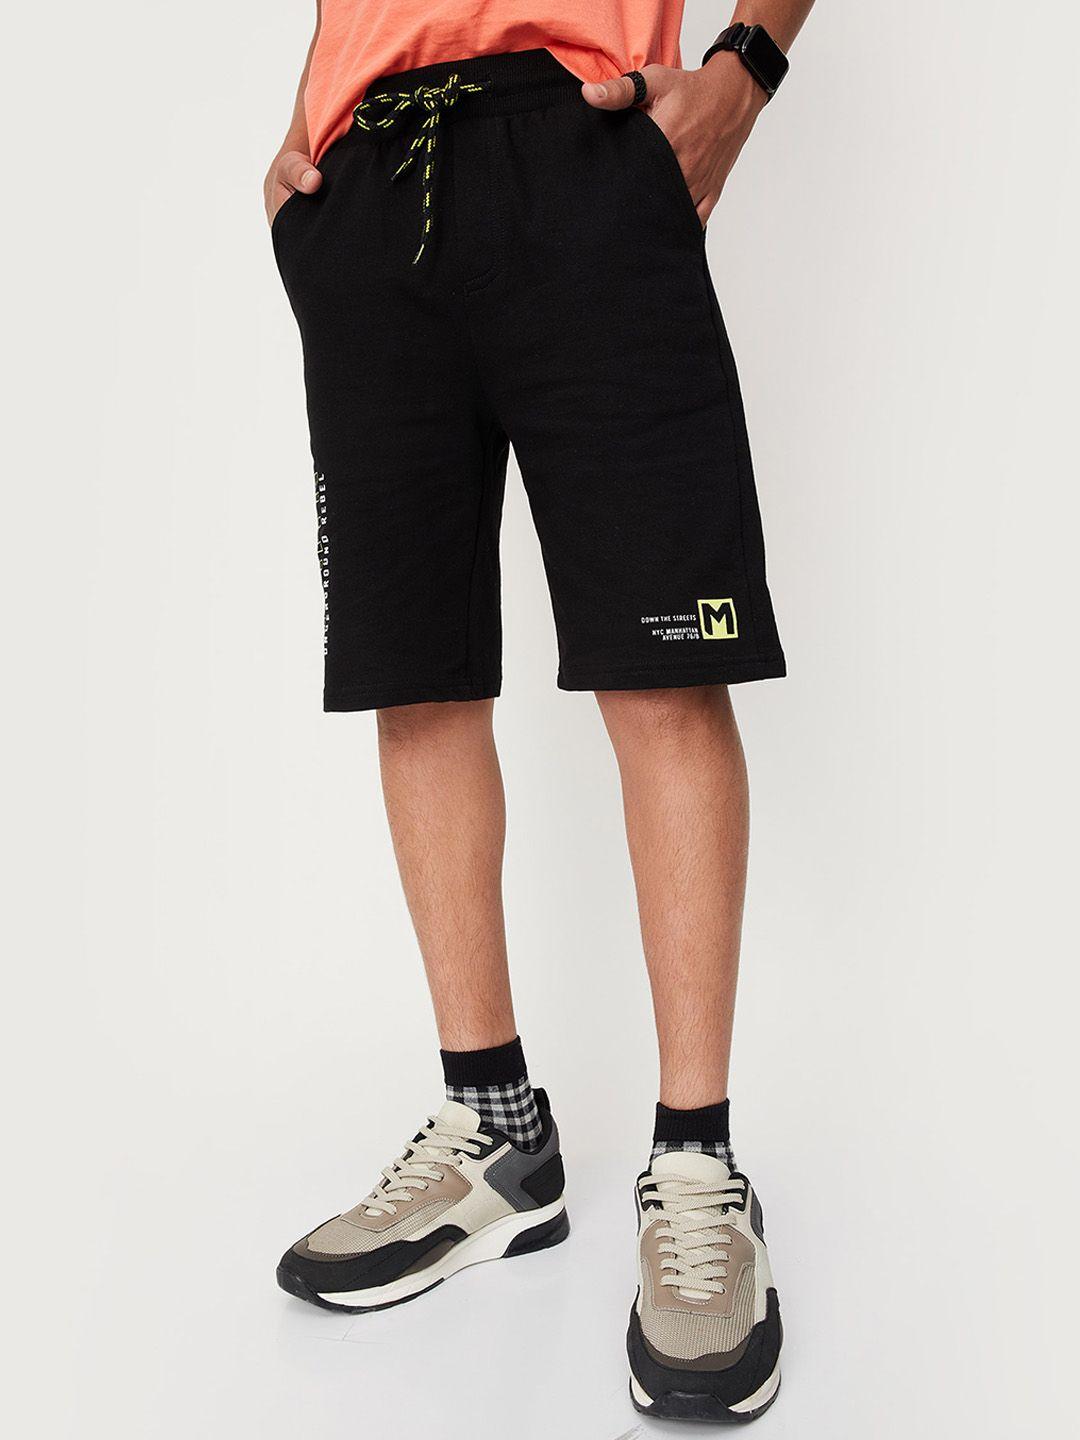 max-boys-black-pure-cotton-shorts